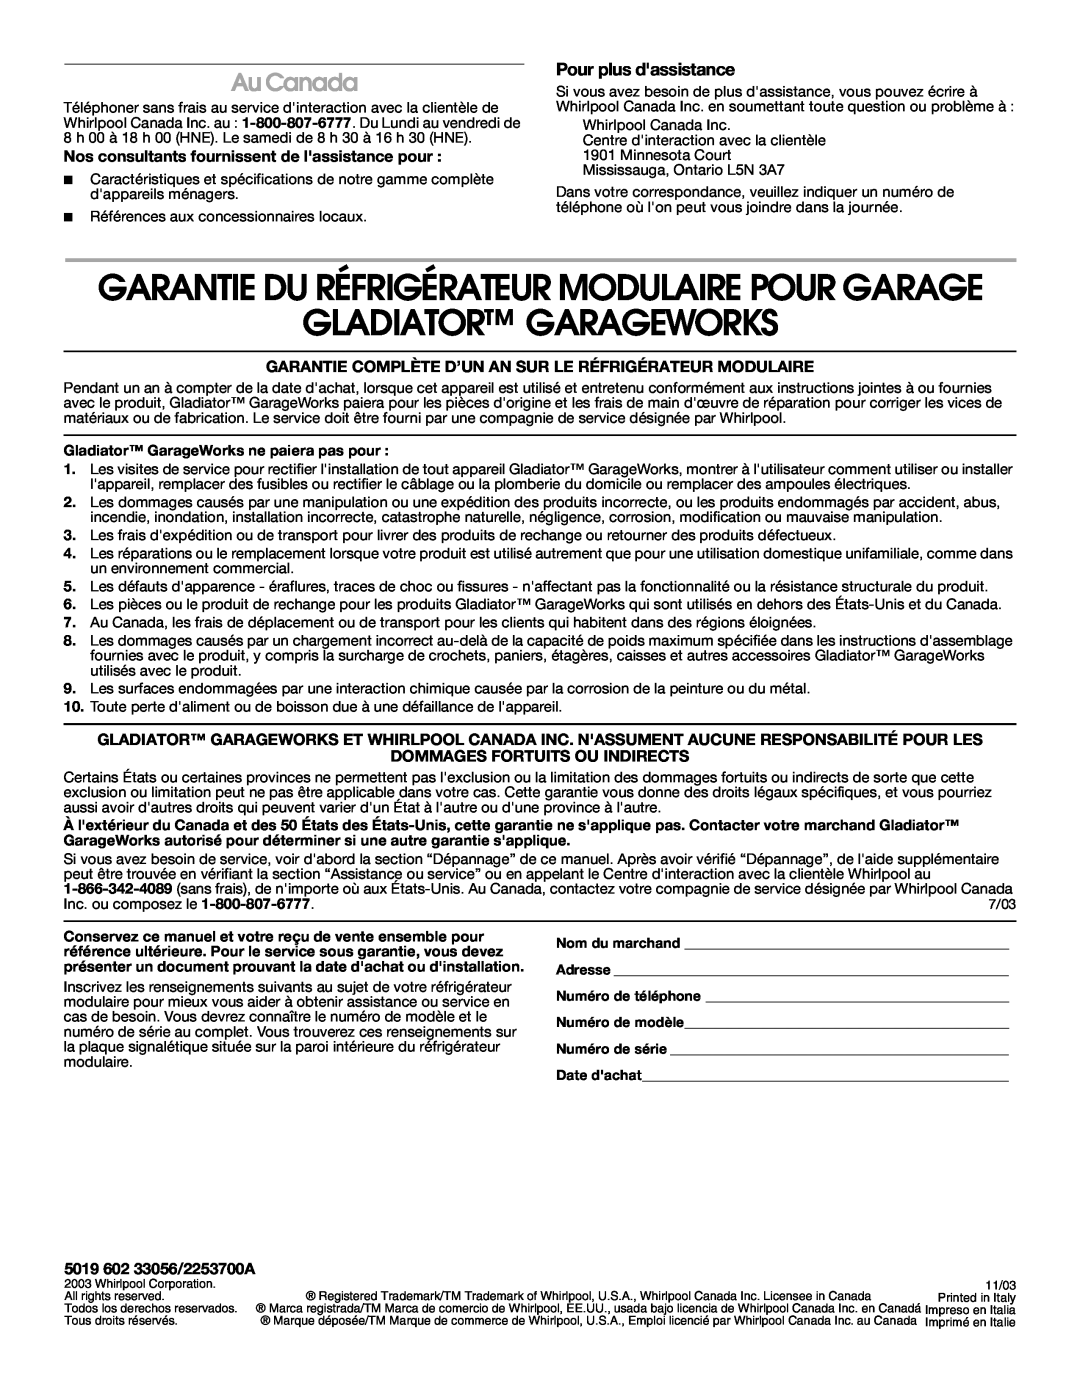 Whirlpool GARF06XXMG00 manual Gladiator Garageworks, Garantie Du Réfrigérateur Modulaire Pour Garage, Au Canada 